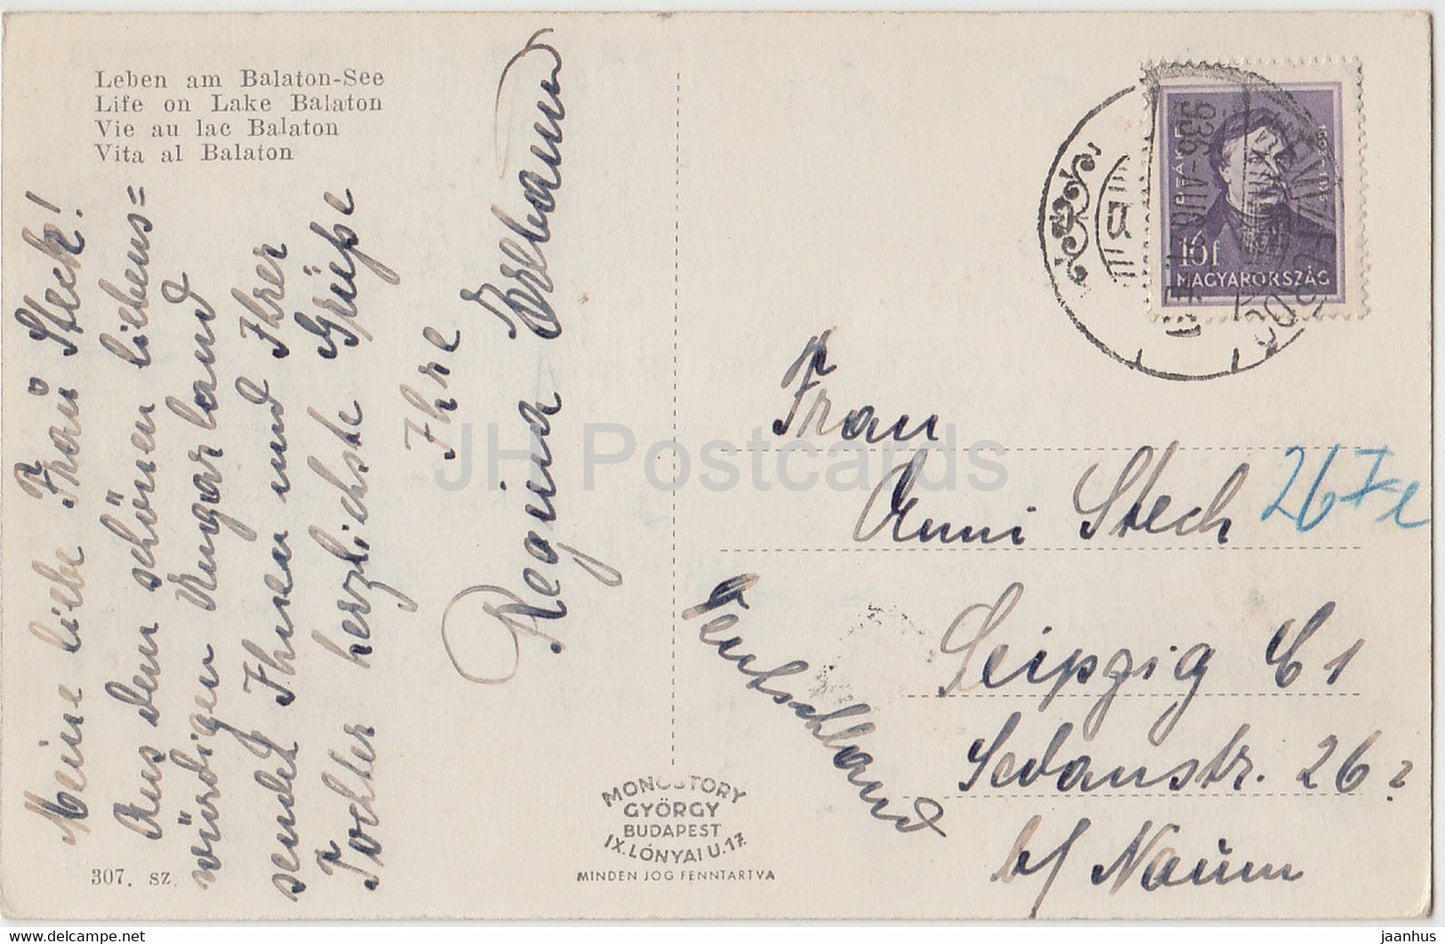 Balatoni elet - Leben am Balaton See - Segelboot - Angeln - alte Postkarte - 1921 - Ungarn - gebraucht